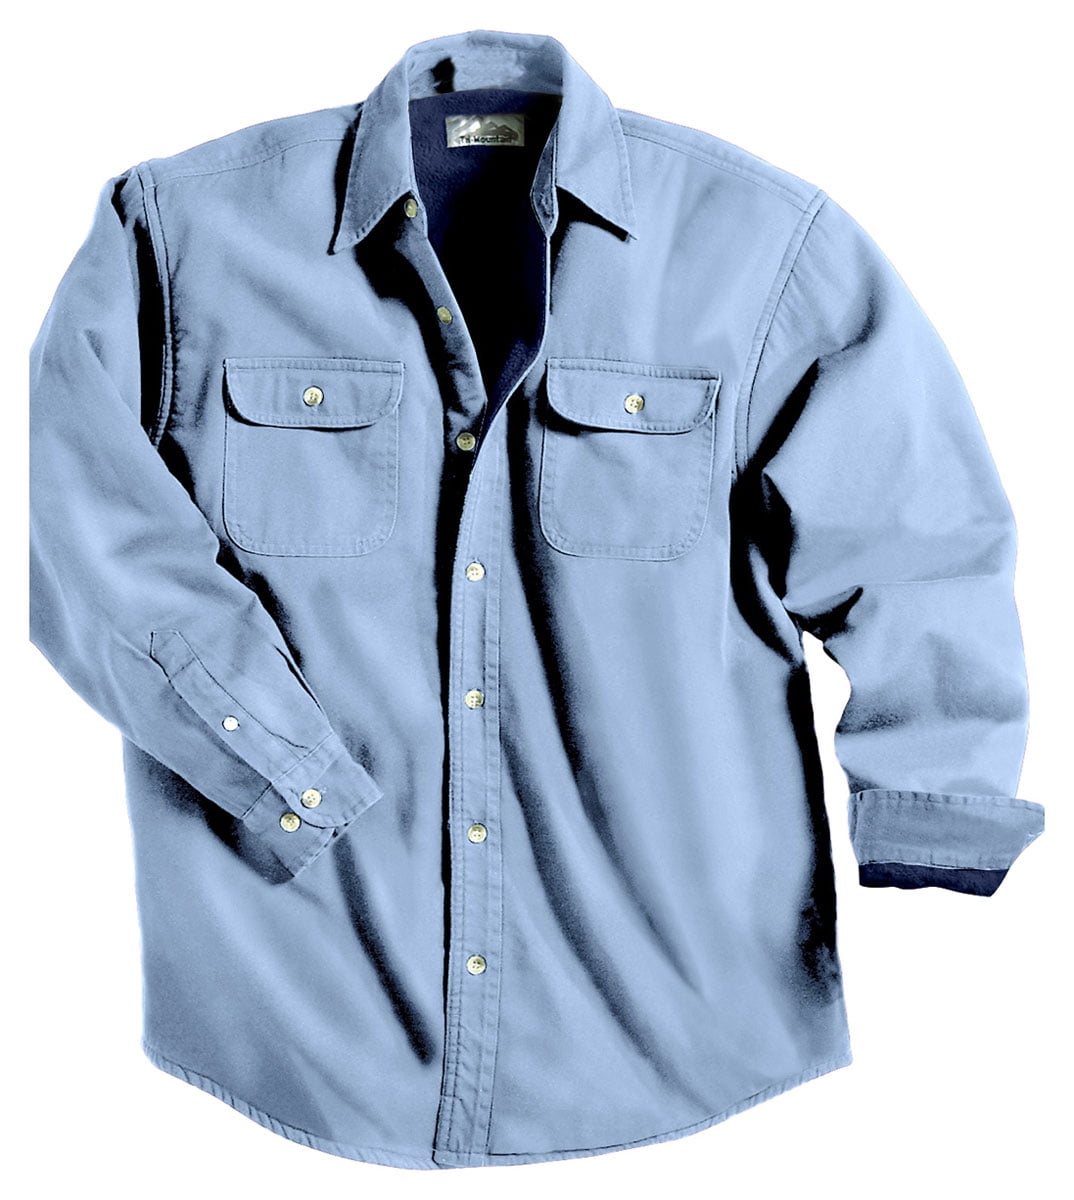 denim shirt with jacket